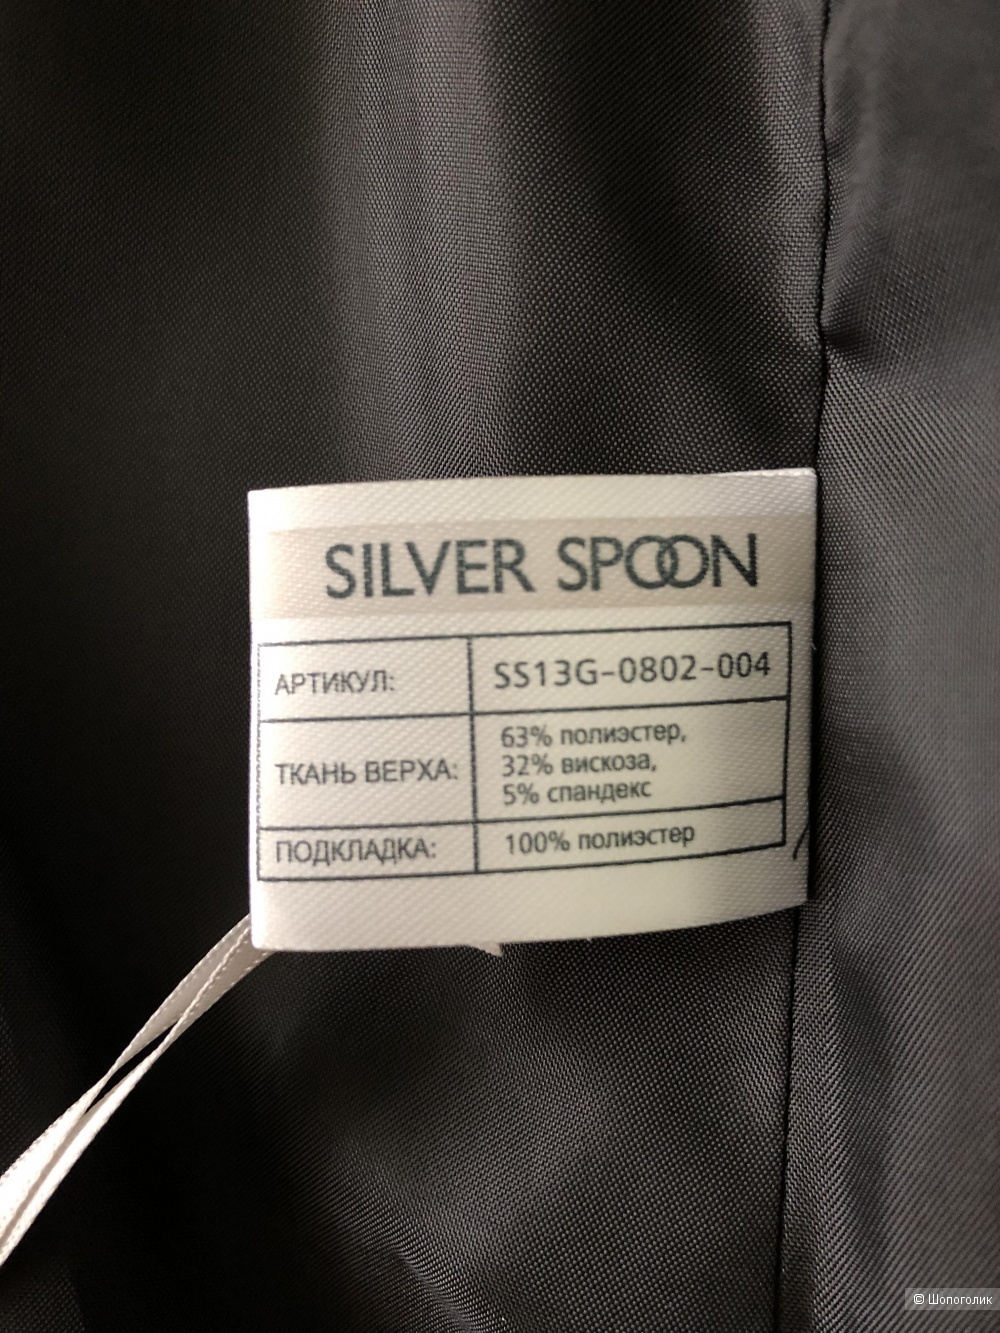 Школьный жакет Silver spoon, 134